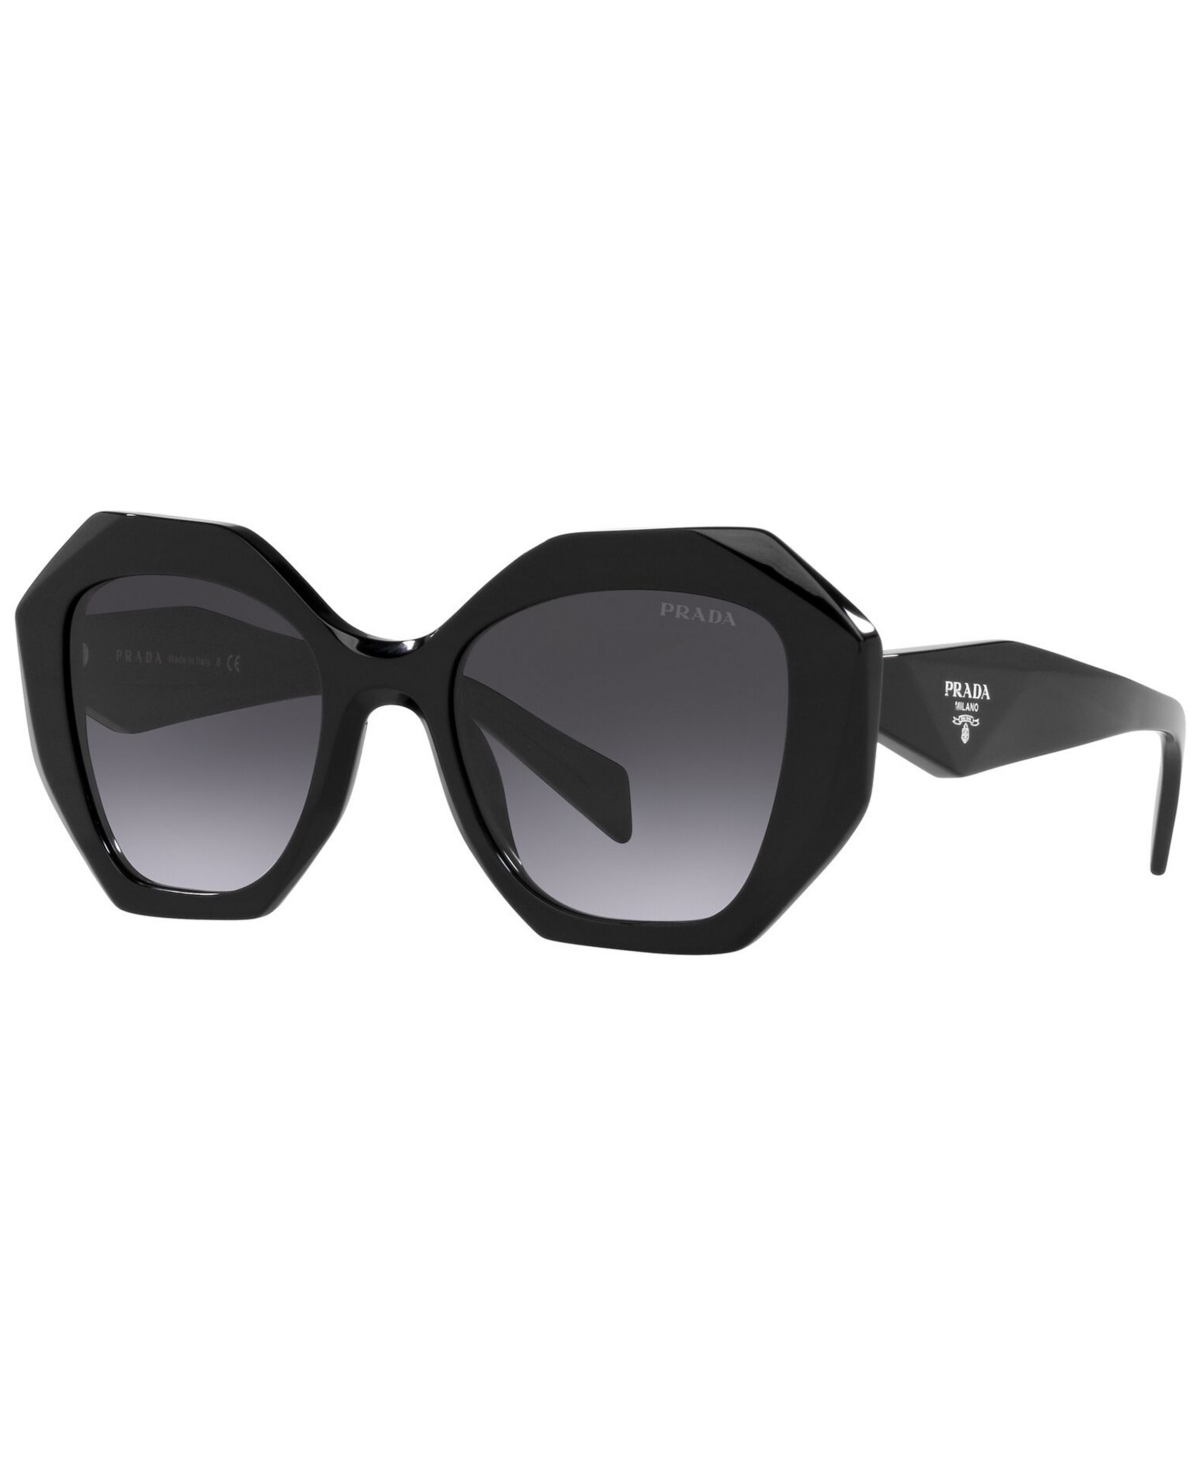 Prada Women's Sunglasses, Pr 16ws In Black,grey Gradient